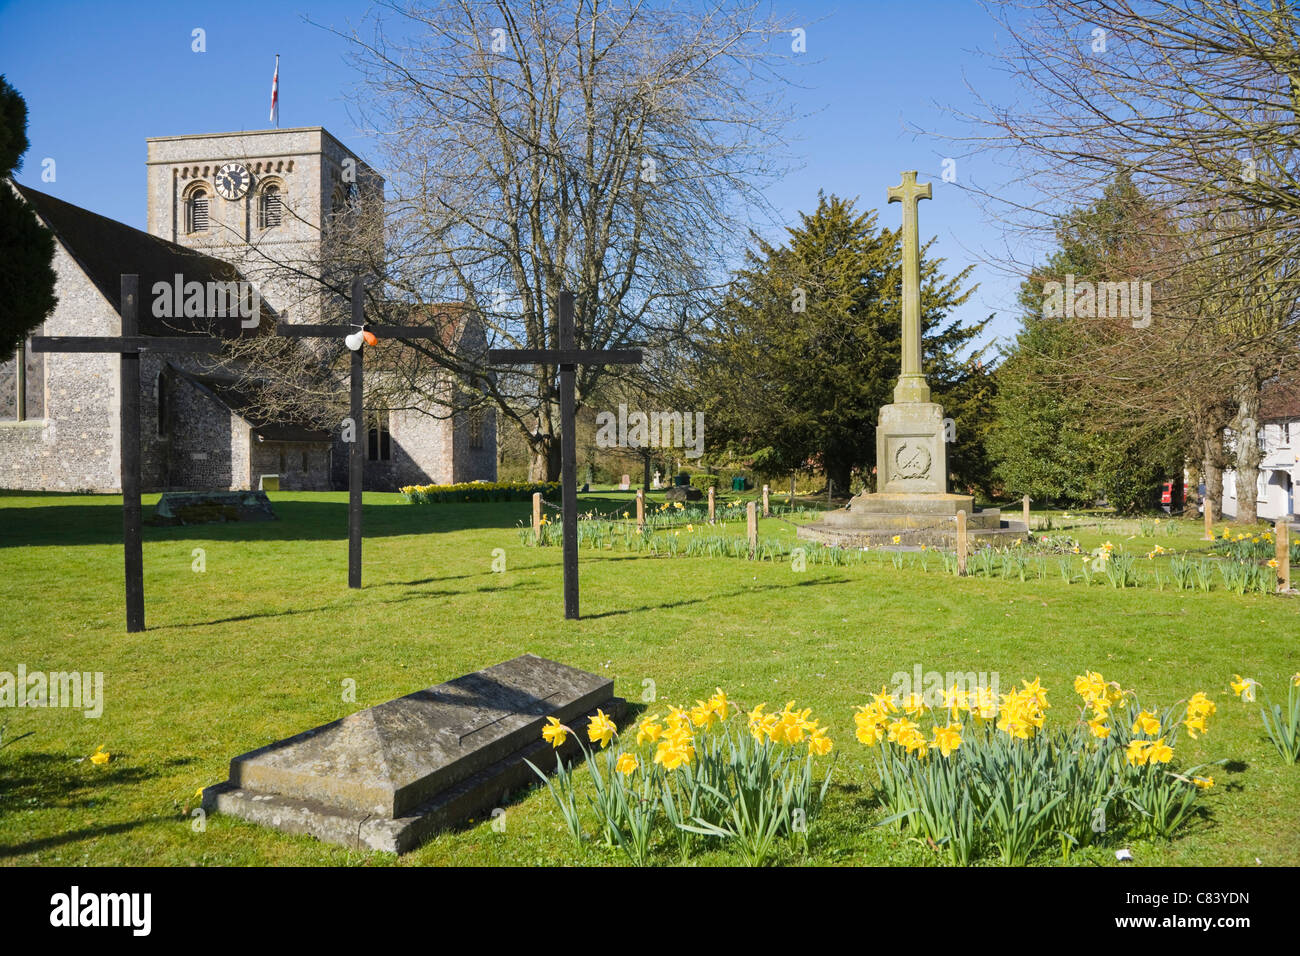 St Mary's Church and World war memorial cross, Kingsclere, Hampshire, England, UK Stock Photo